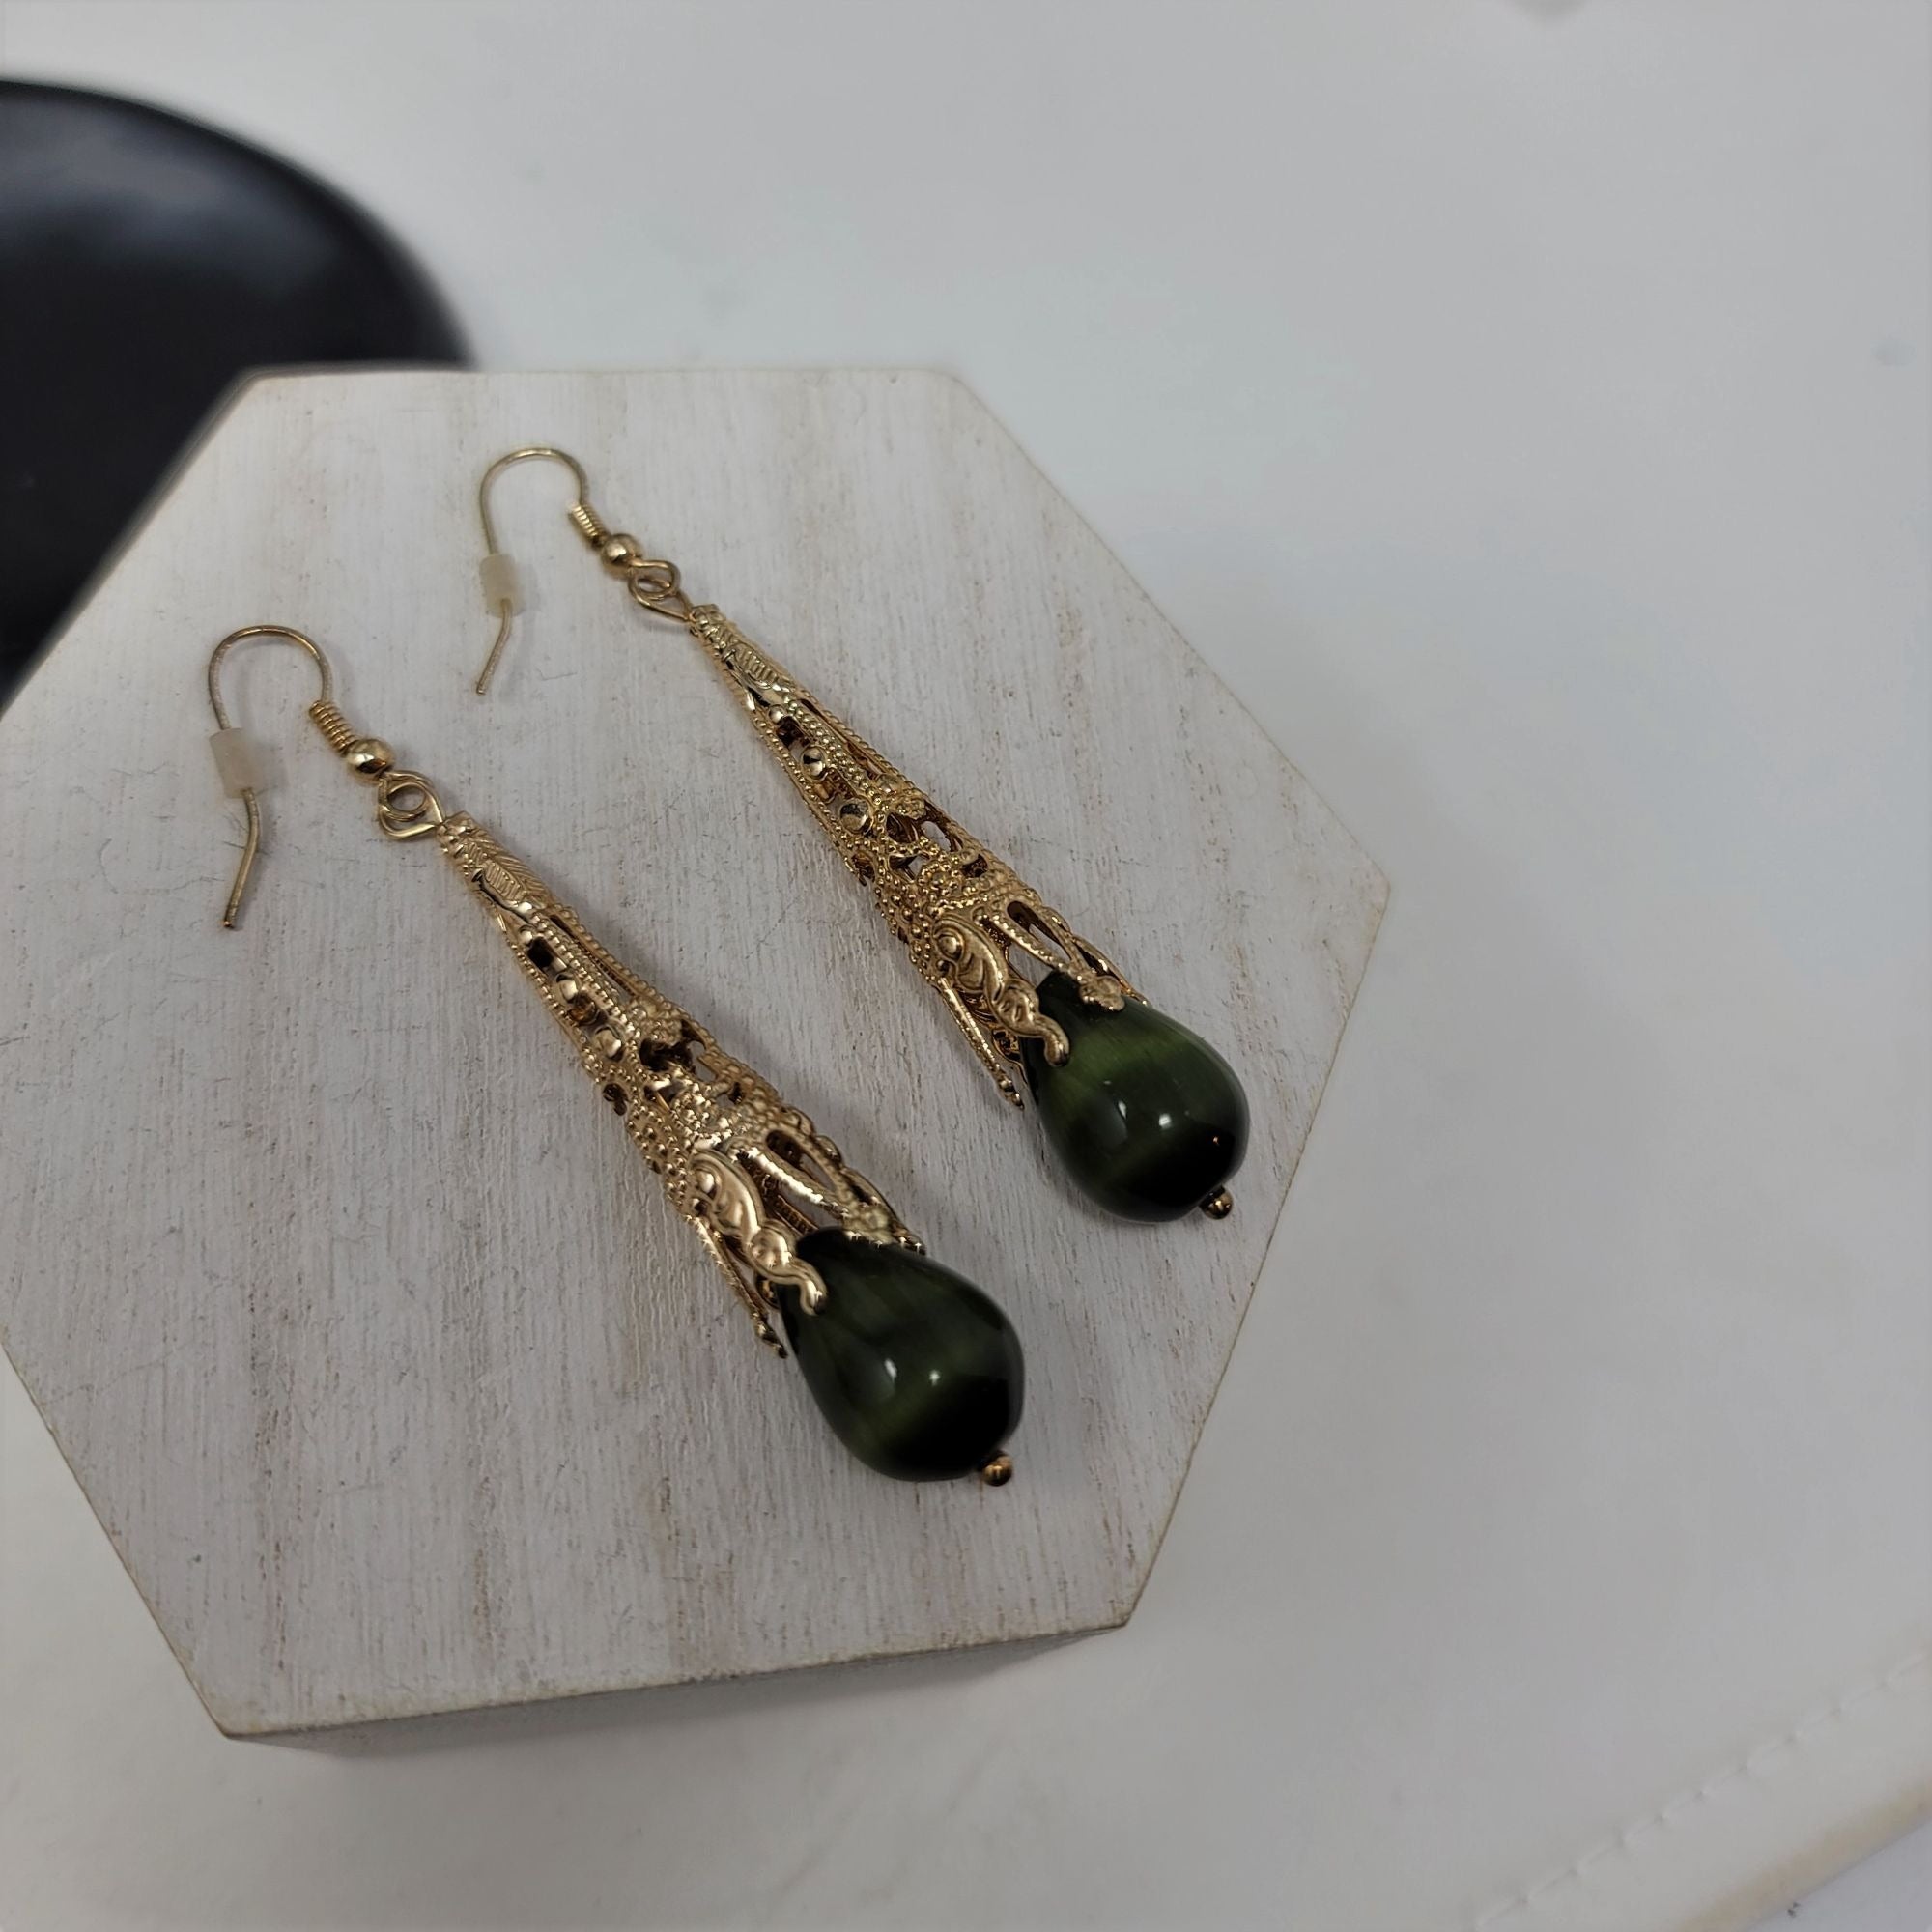 Elegant Green Pierced Earrings Exotic 3" Goldtone